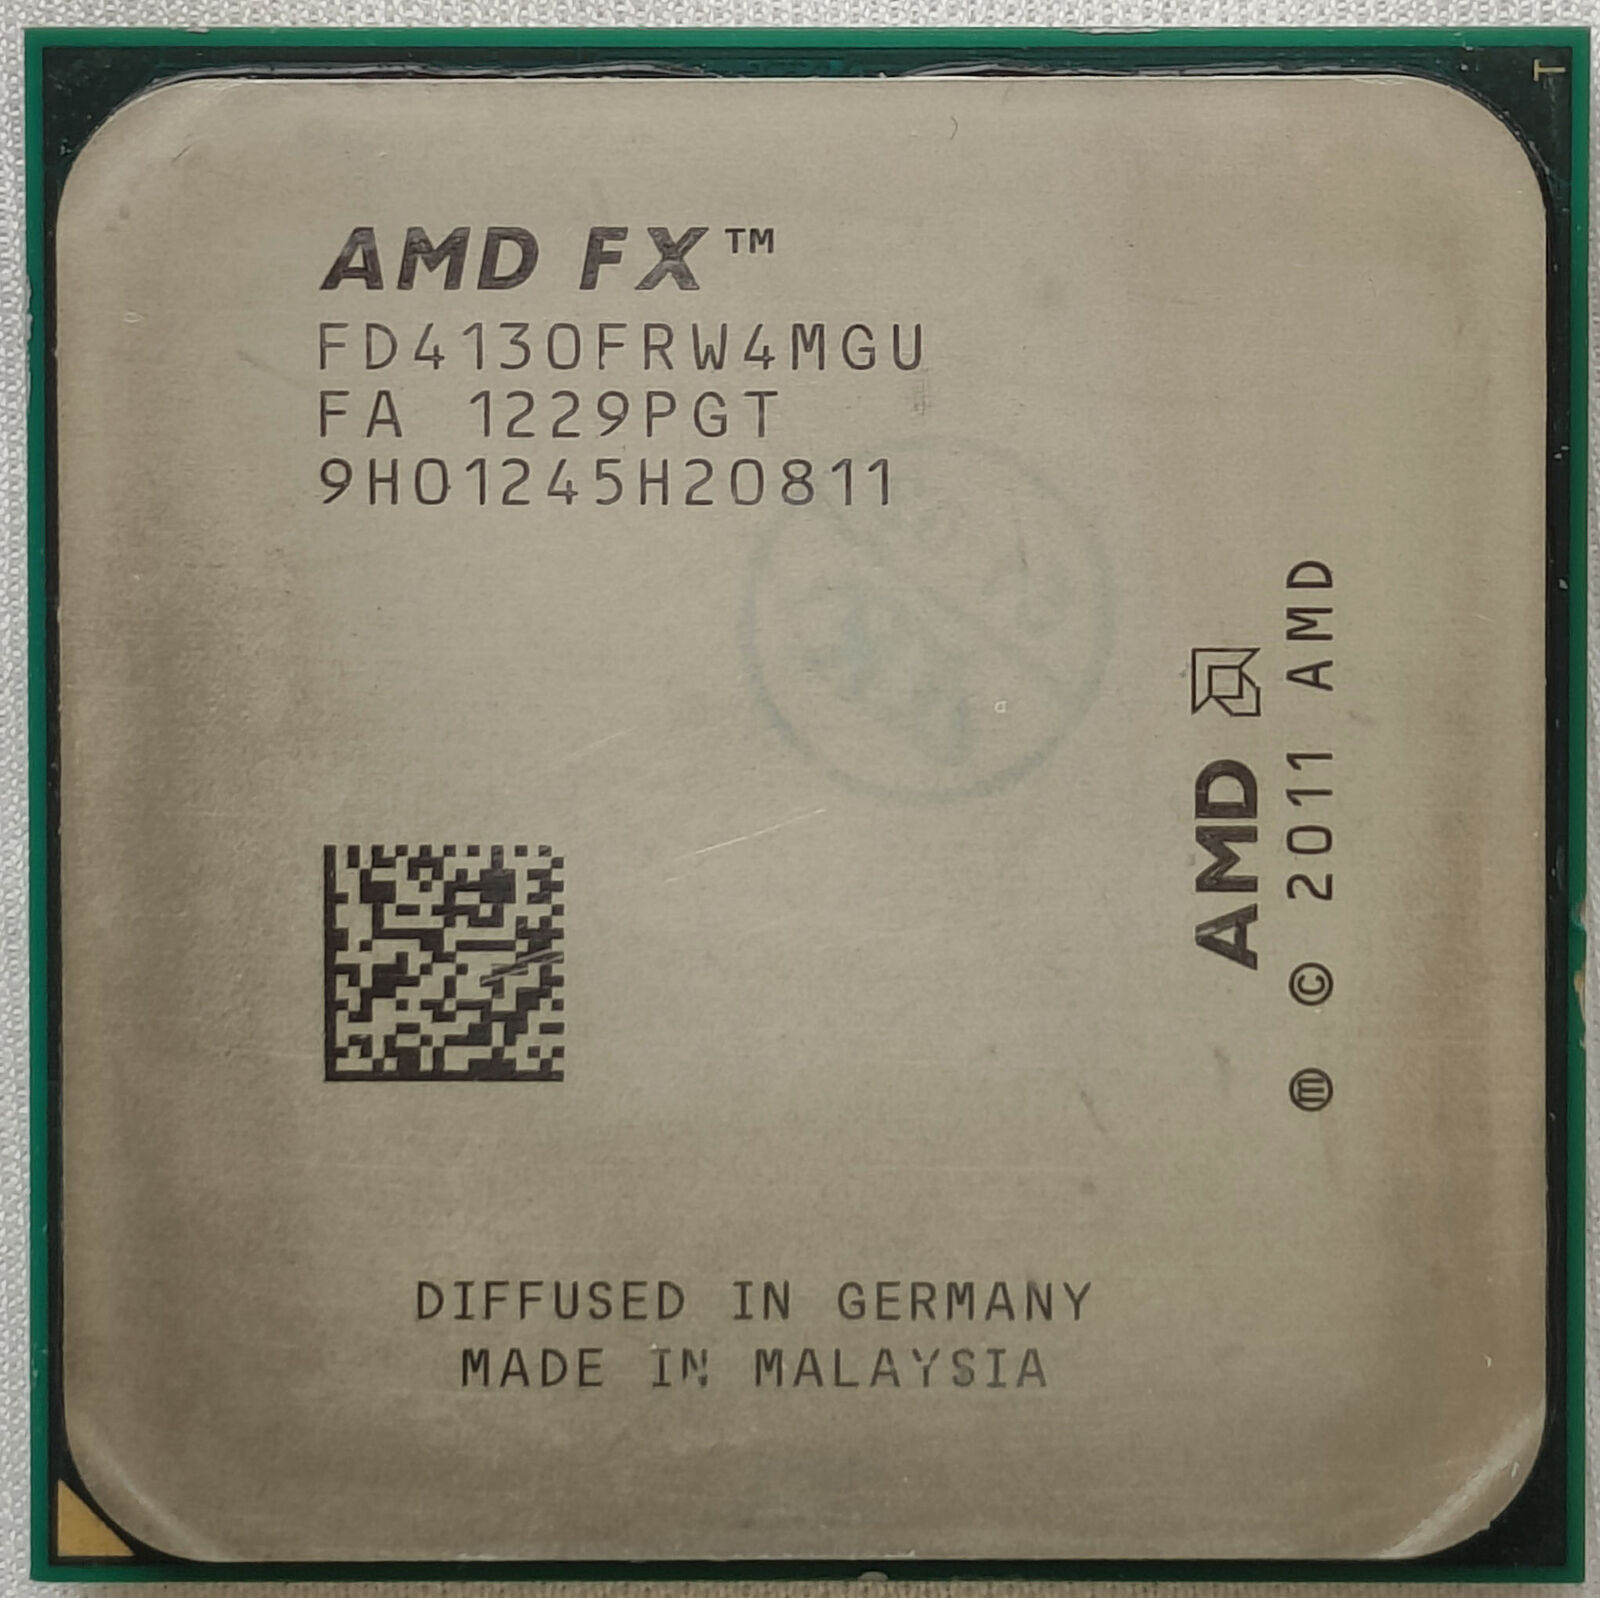 AMD FX-Series FX 4130 3.8 GHz Quad Core FD4130FRW4MGU AM3+ Socket CPU Processor